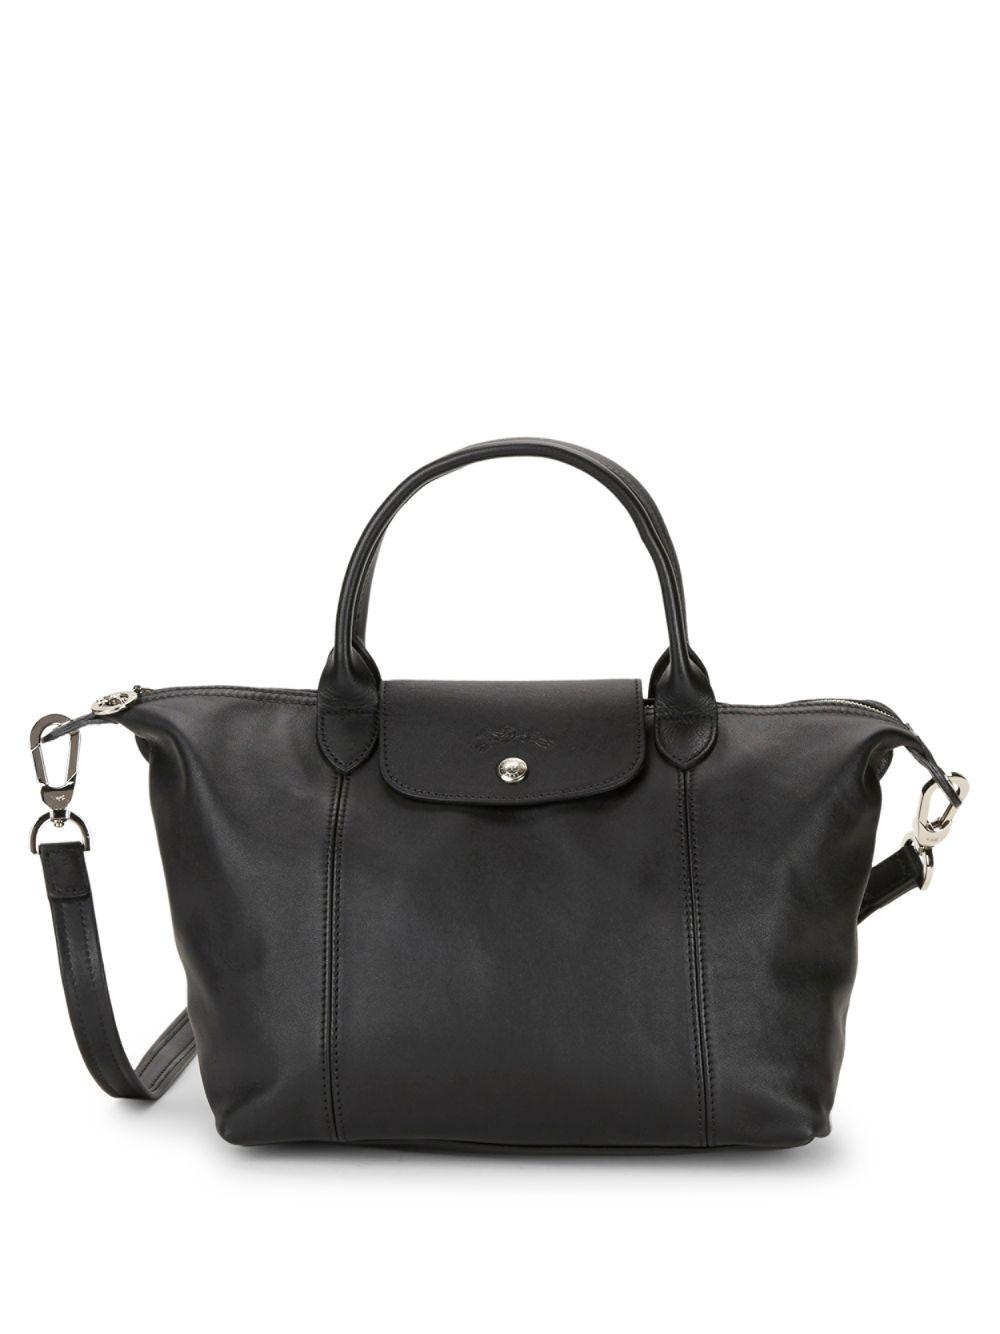 Longchamp Le Pliage Cuir Leather Top Handle Bag in Black - Lyst